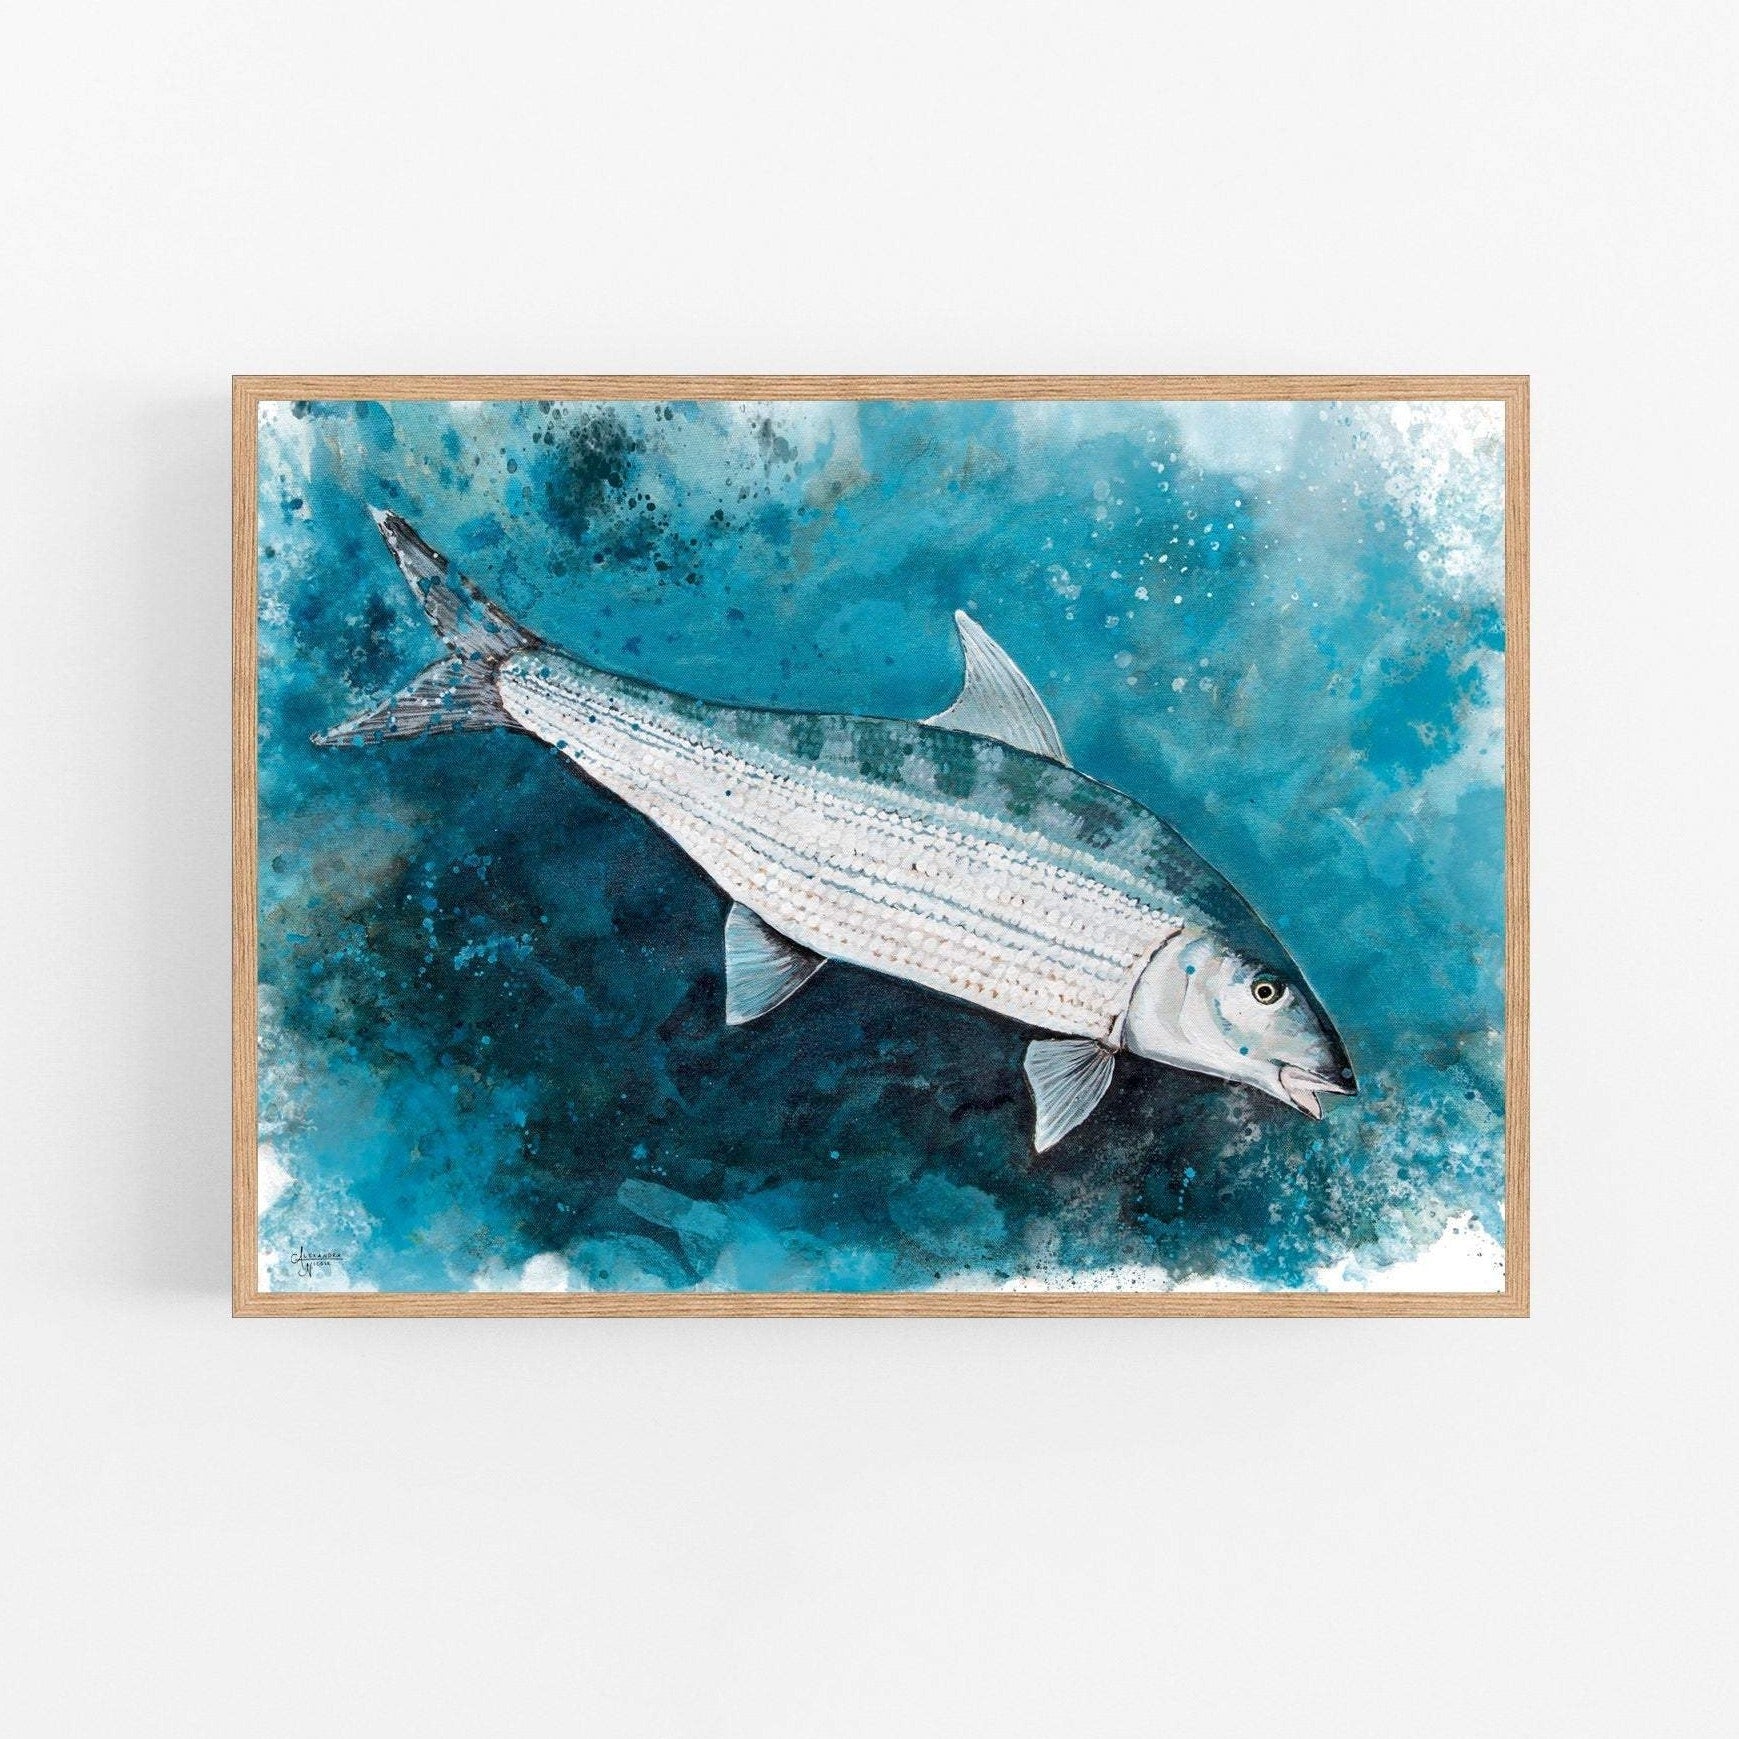 Bonefish Art, Saltwater Fish - ArtByAlexandraNicole